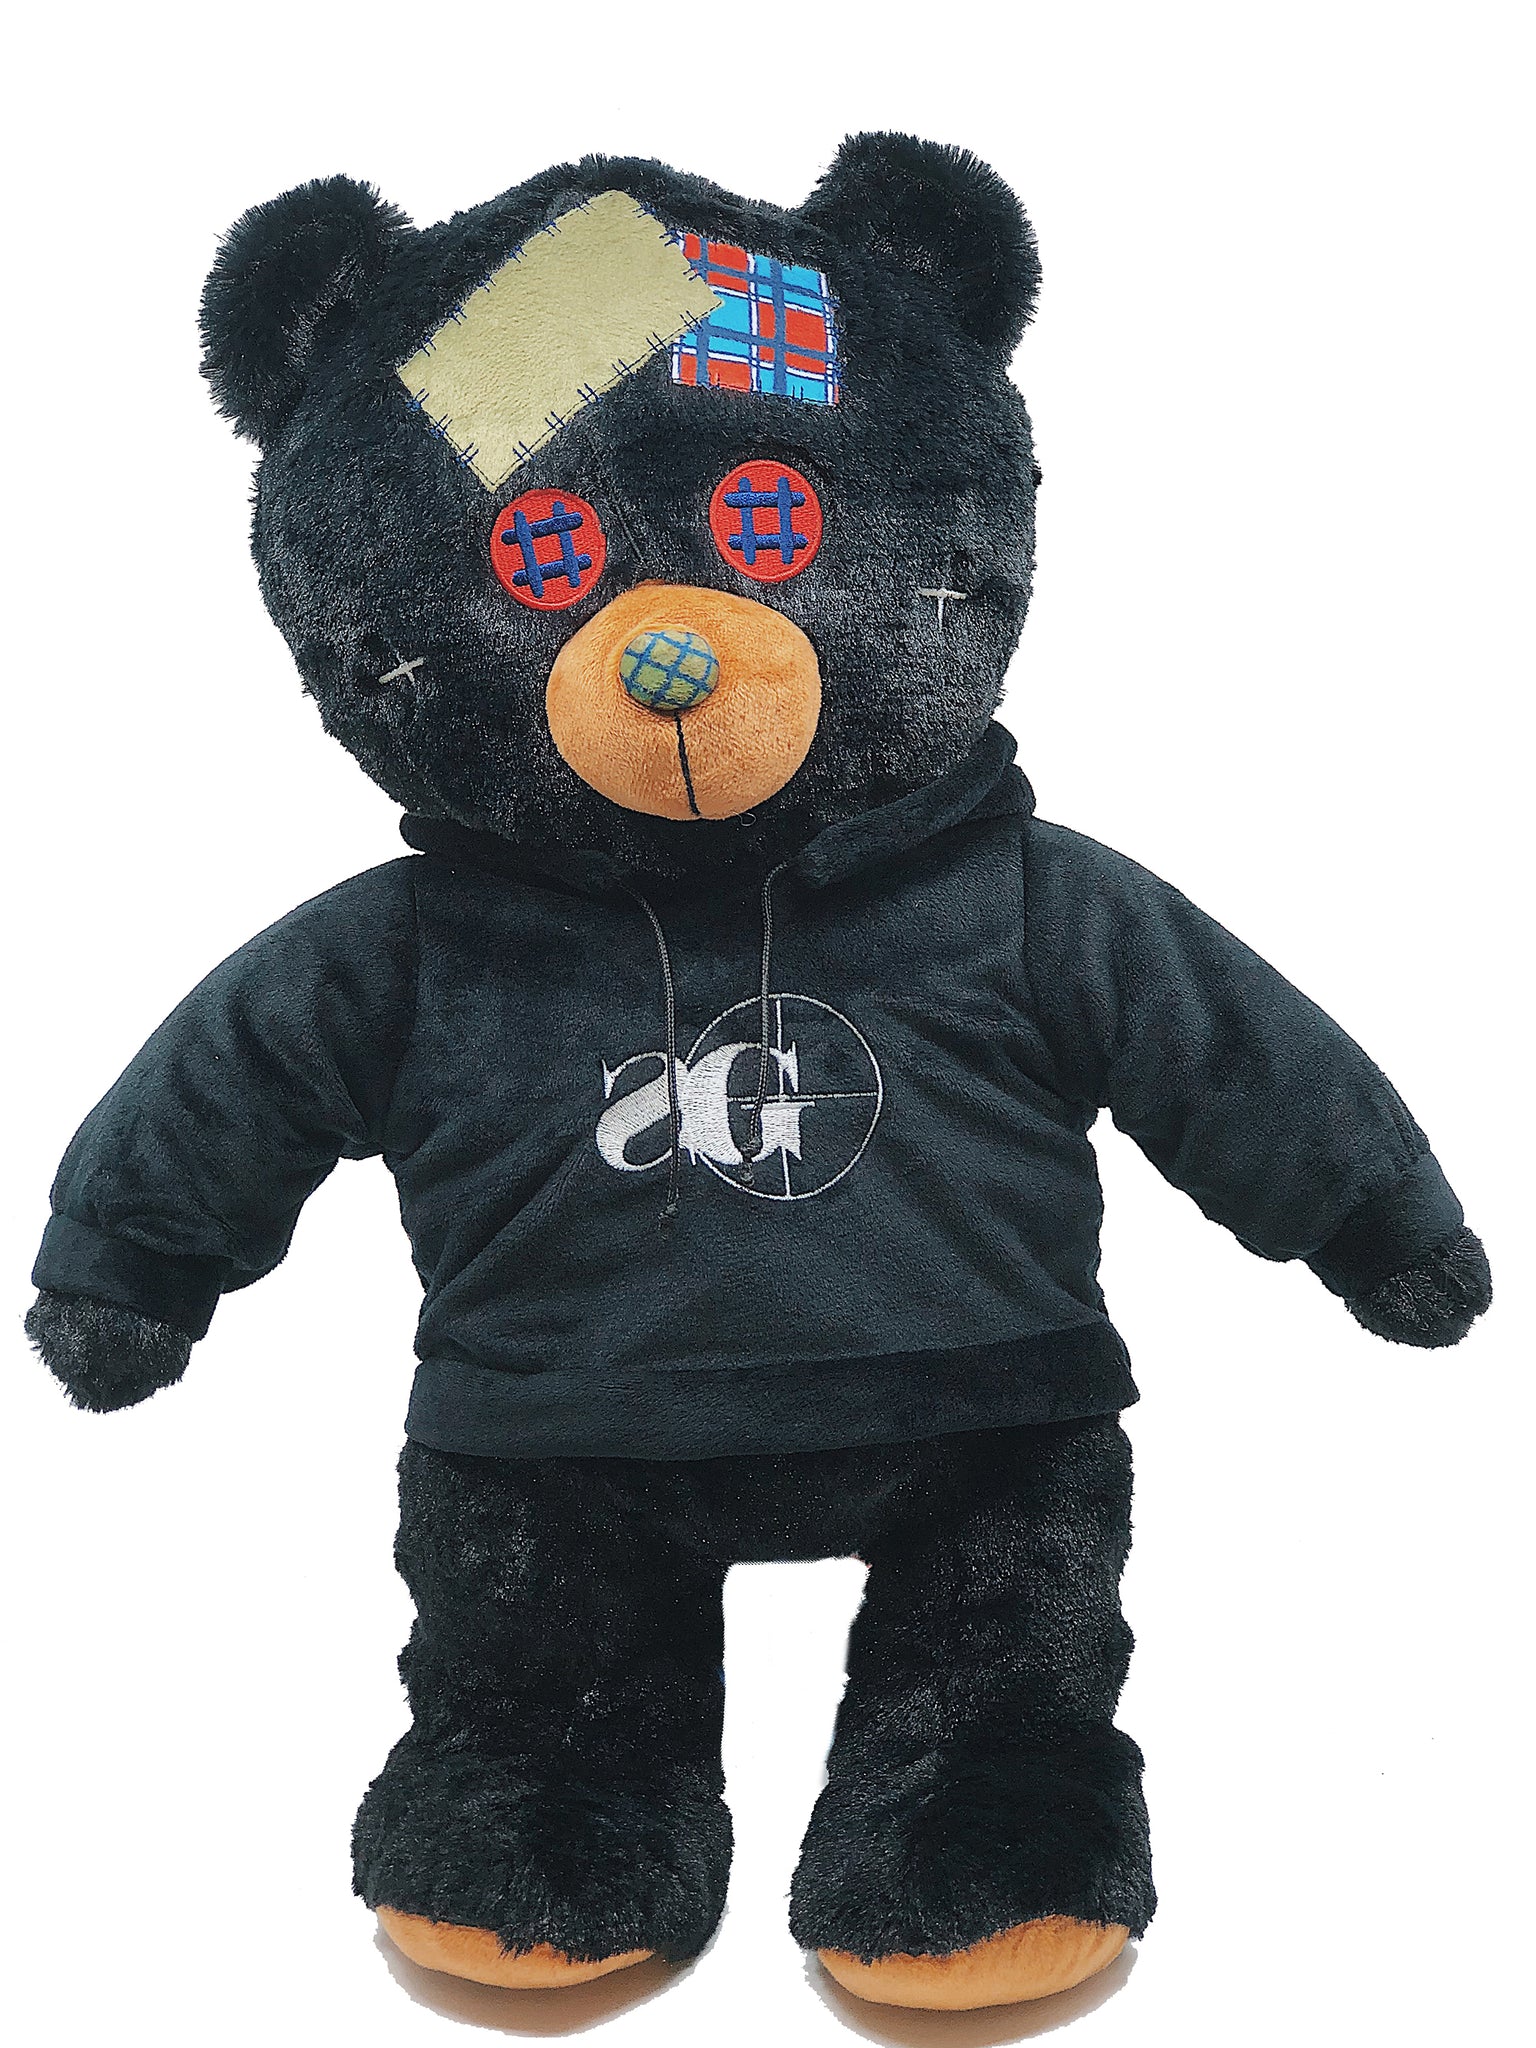 Black Bear Mask Hoodie T Shirt Roblox - t shirt roblox 🐻⚫*(original) black bear mask hoodie*⚫🐻